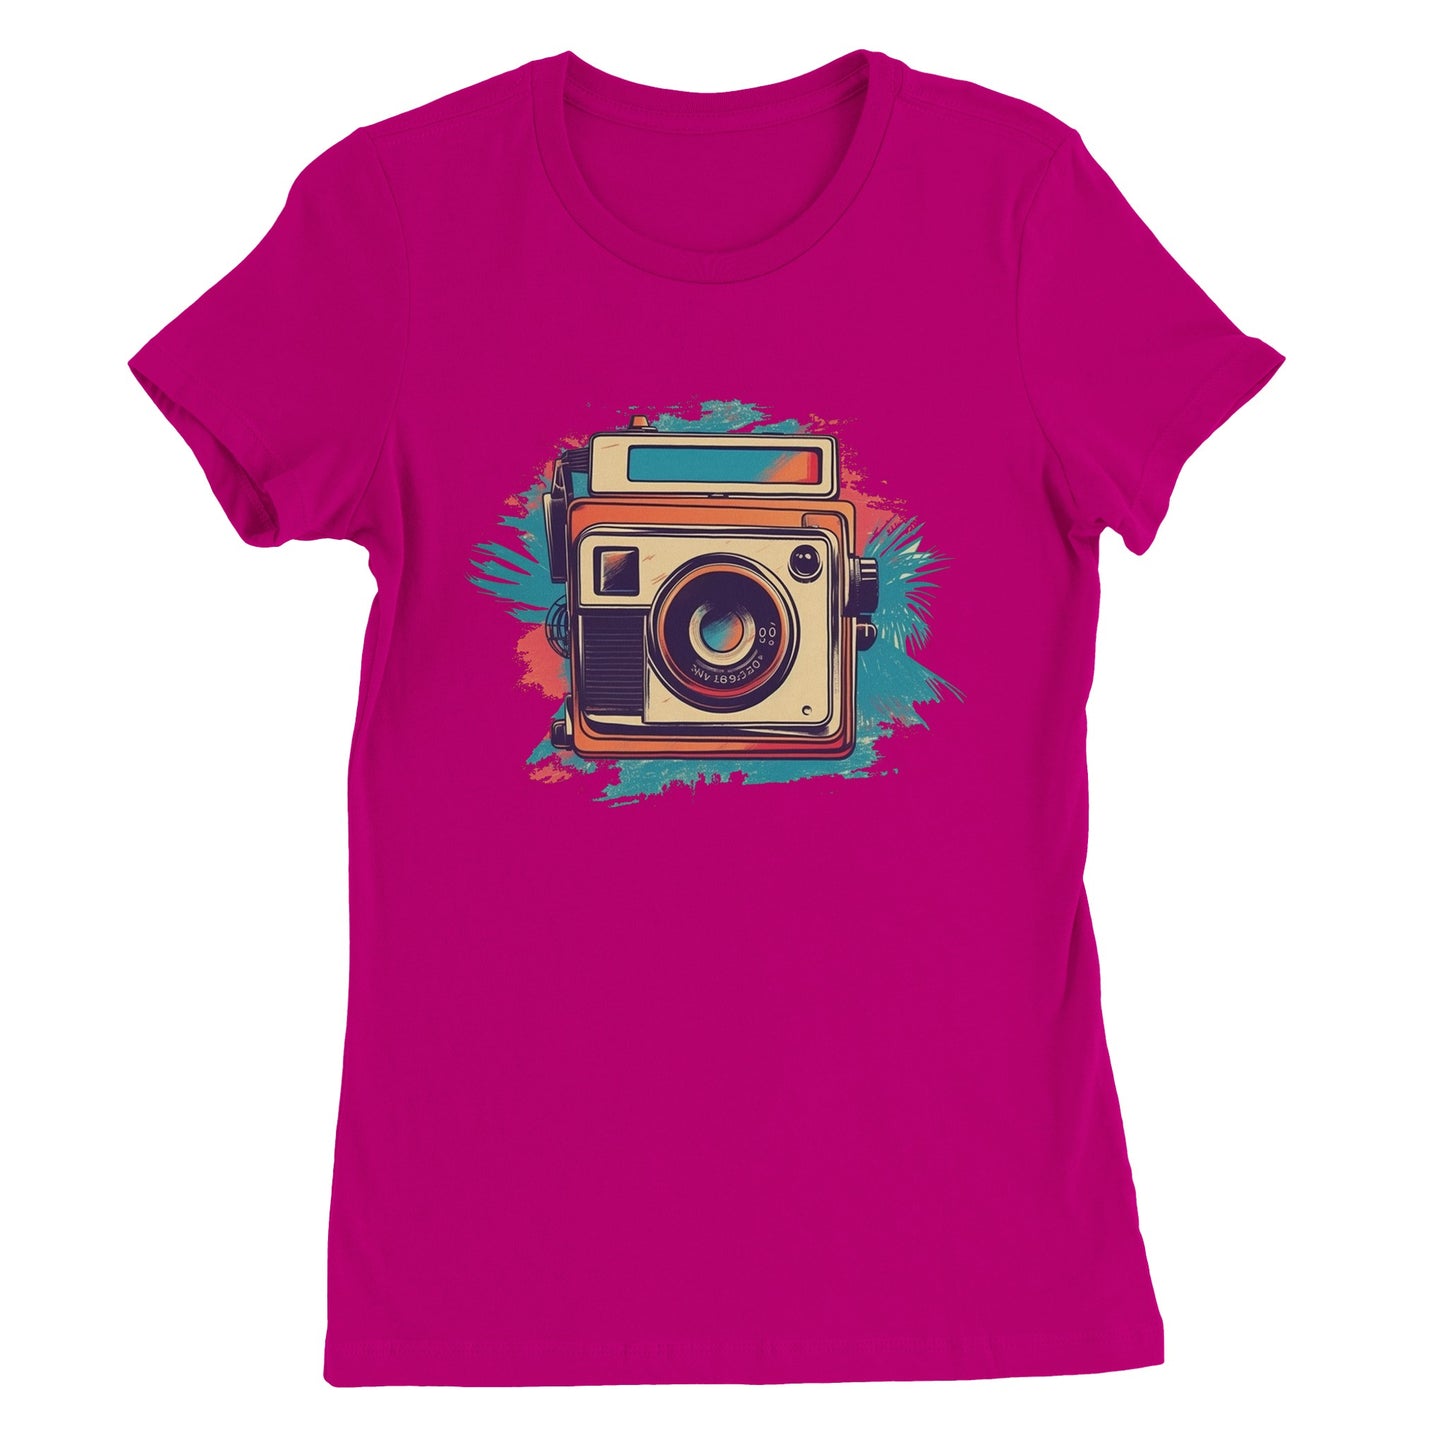 Artwork T-shirt - Polaroid Camera Vintage Artwork Number 1 - Premium Women's T-shirt 